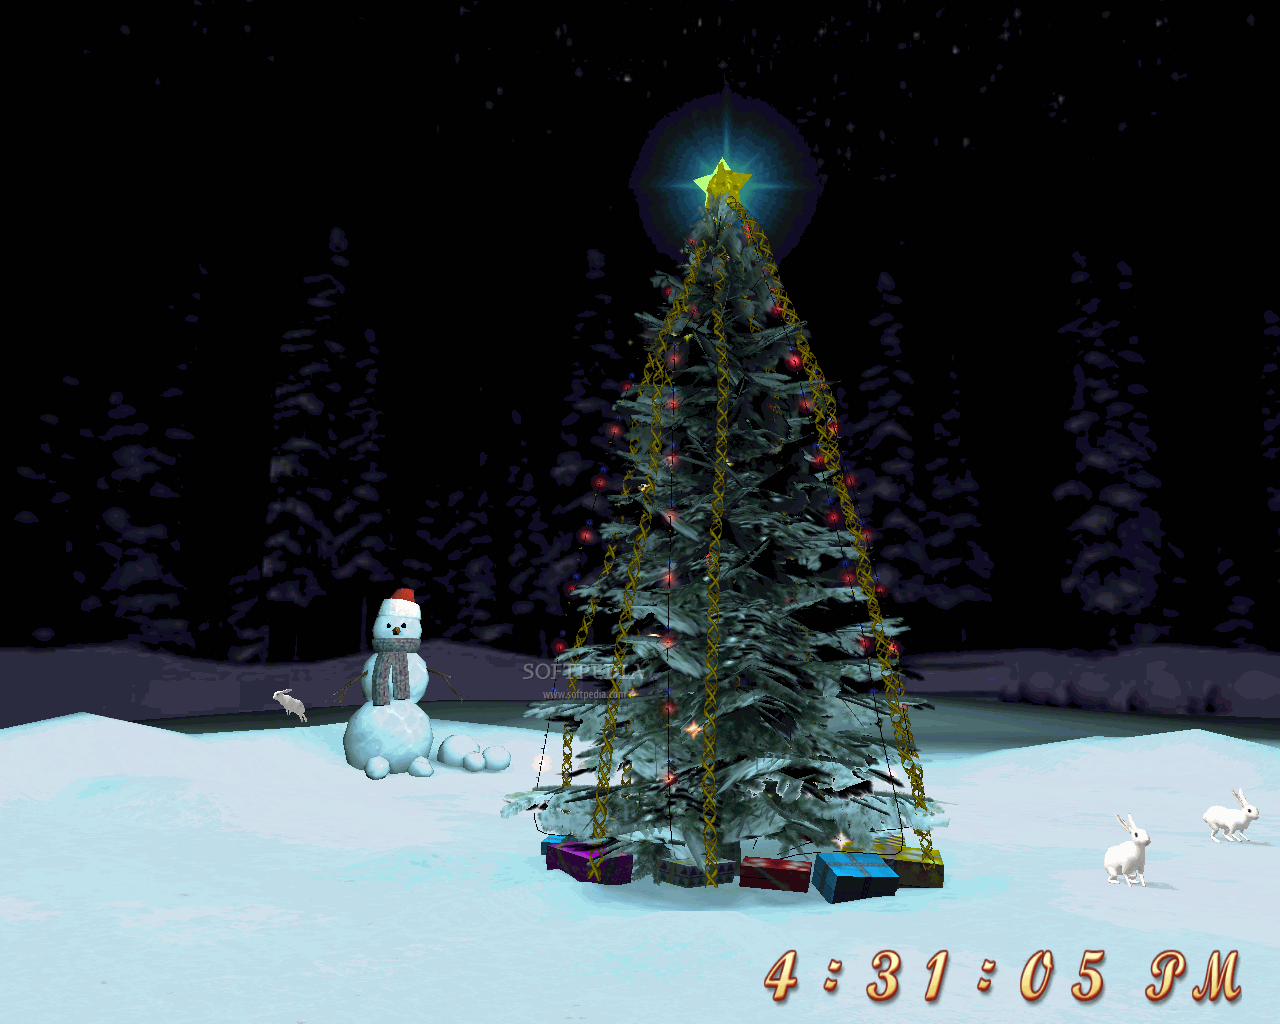 Free Christmas Tree 3D Screensaver